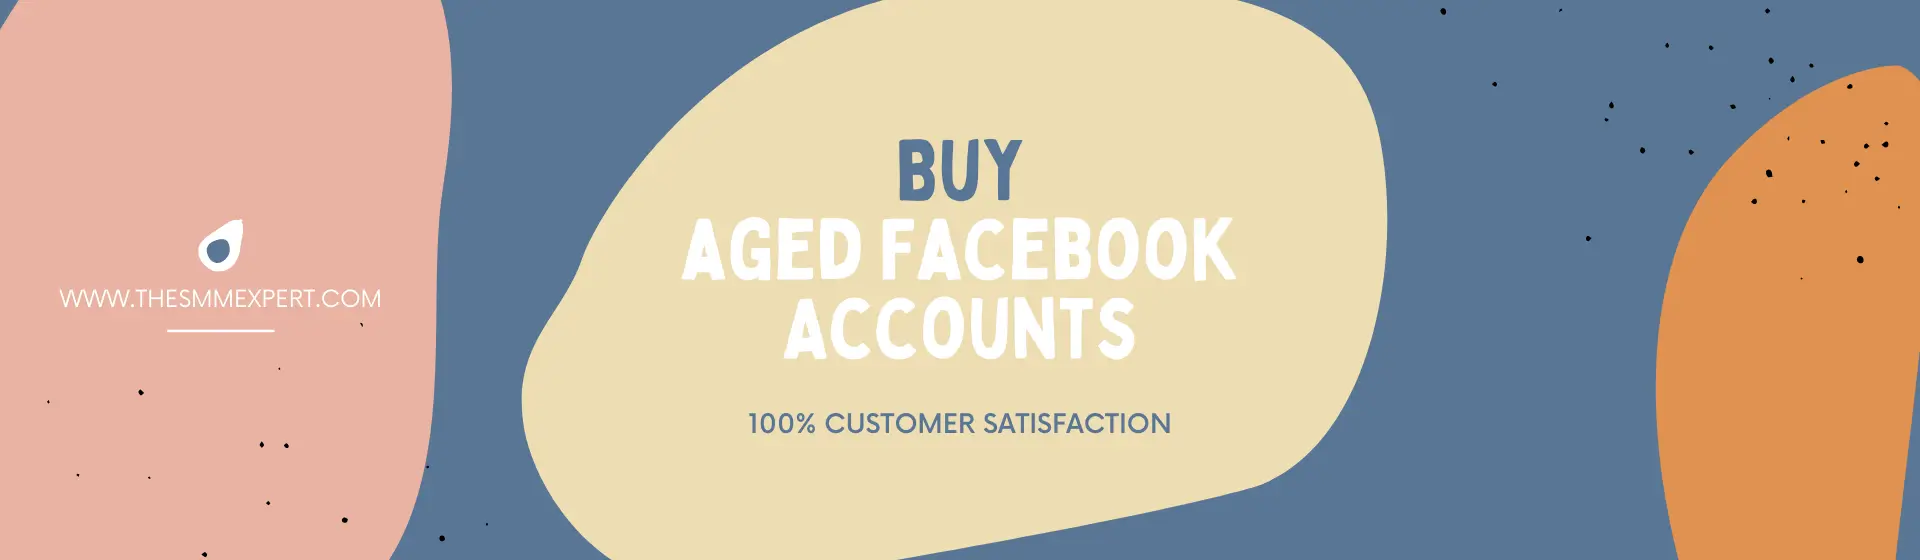 buy aged Facebook accounts